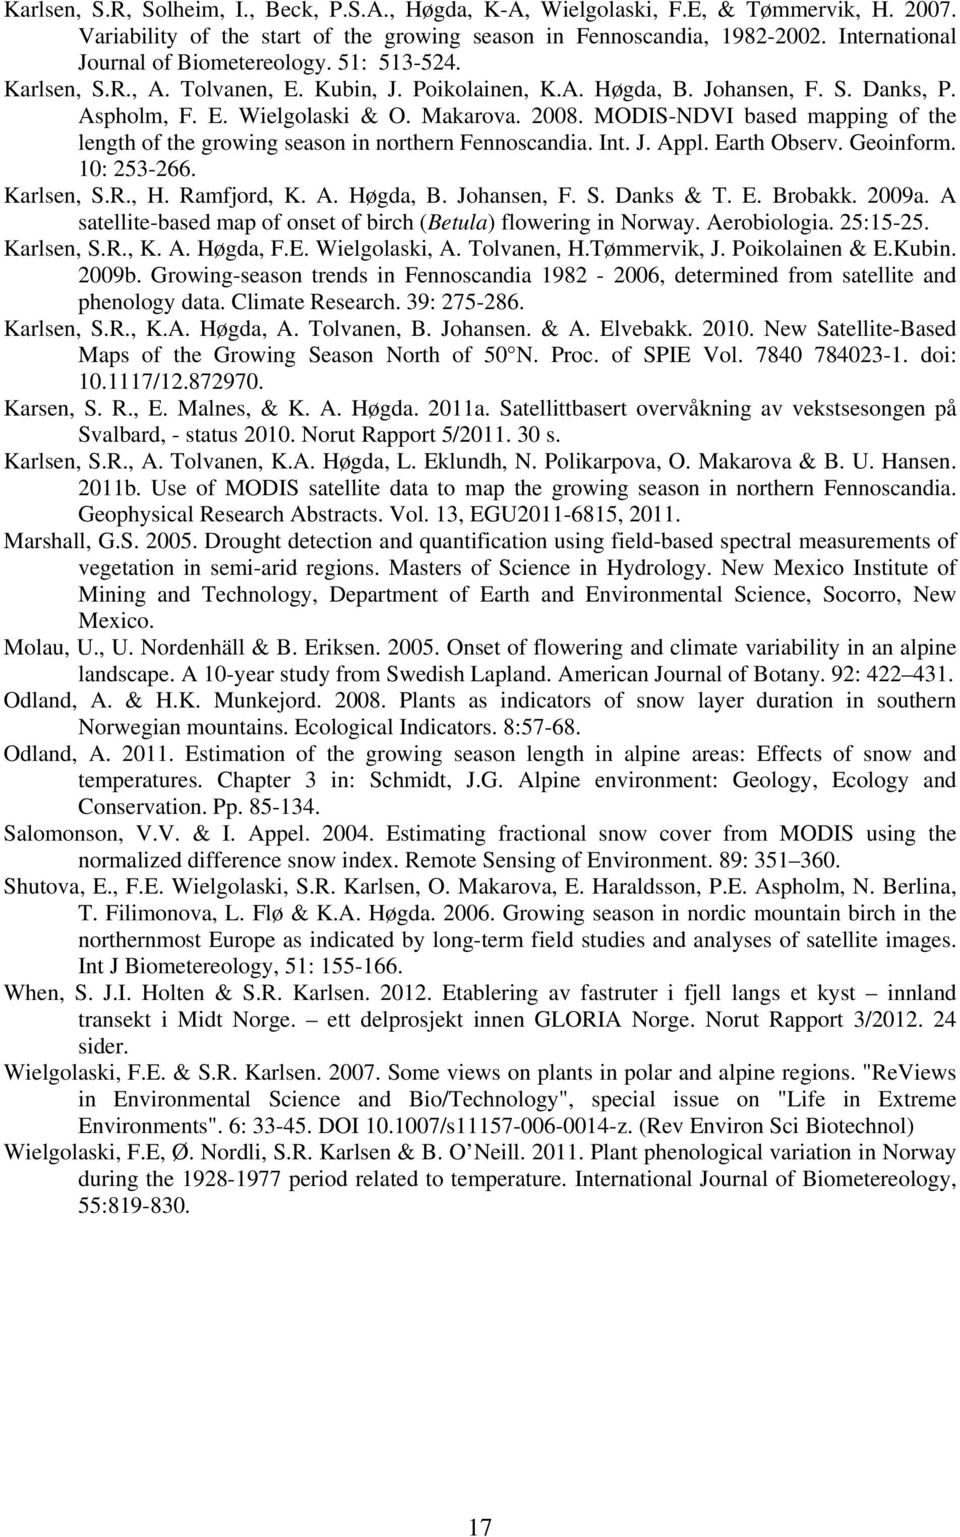 MODIS-NDVI based mapping of the length of the growing season in northern Fennoscandia. Int. J. Appl. Earth Observ. Geoinform. 10: 253-266. Karlsen, S.R., H. Ramfjord, K. A. Høgda, B. Johansen, F. S. Danks & T.